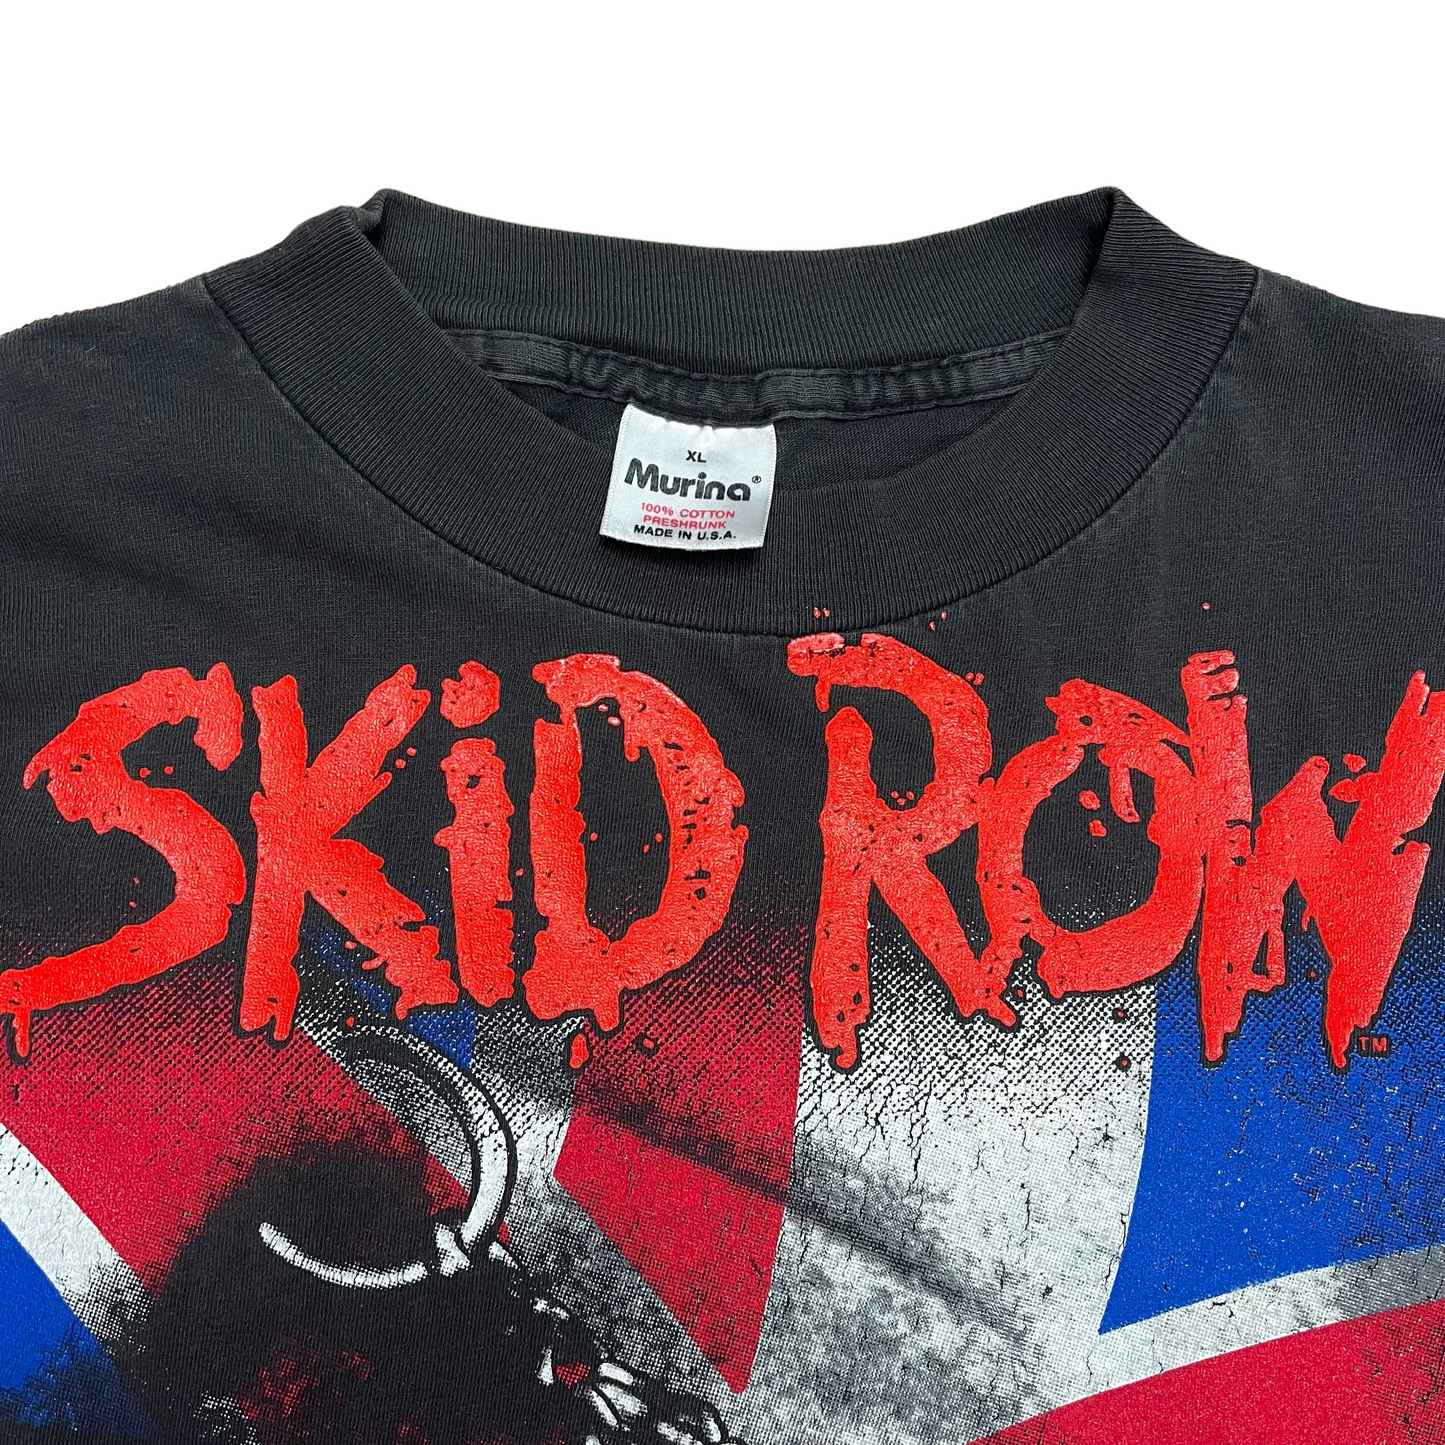 1991/1992 Skid Row 'No Fuckin' Thrills' (XL)